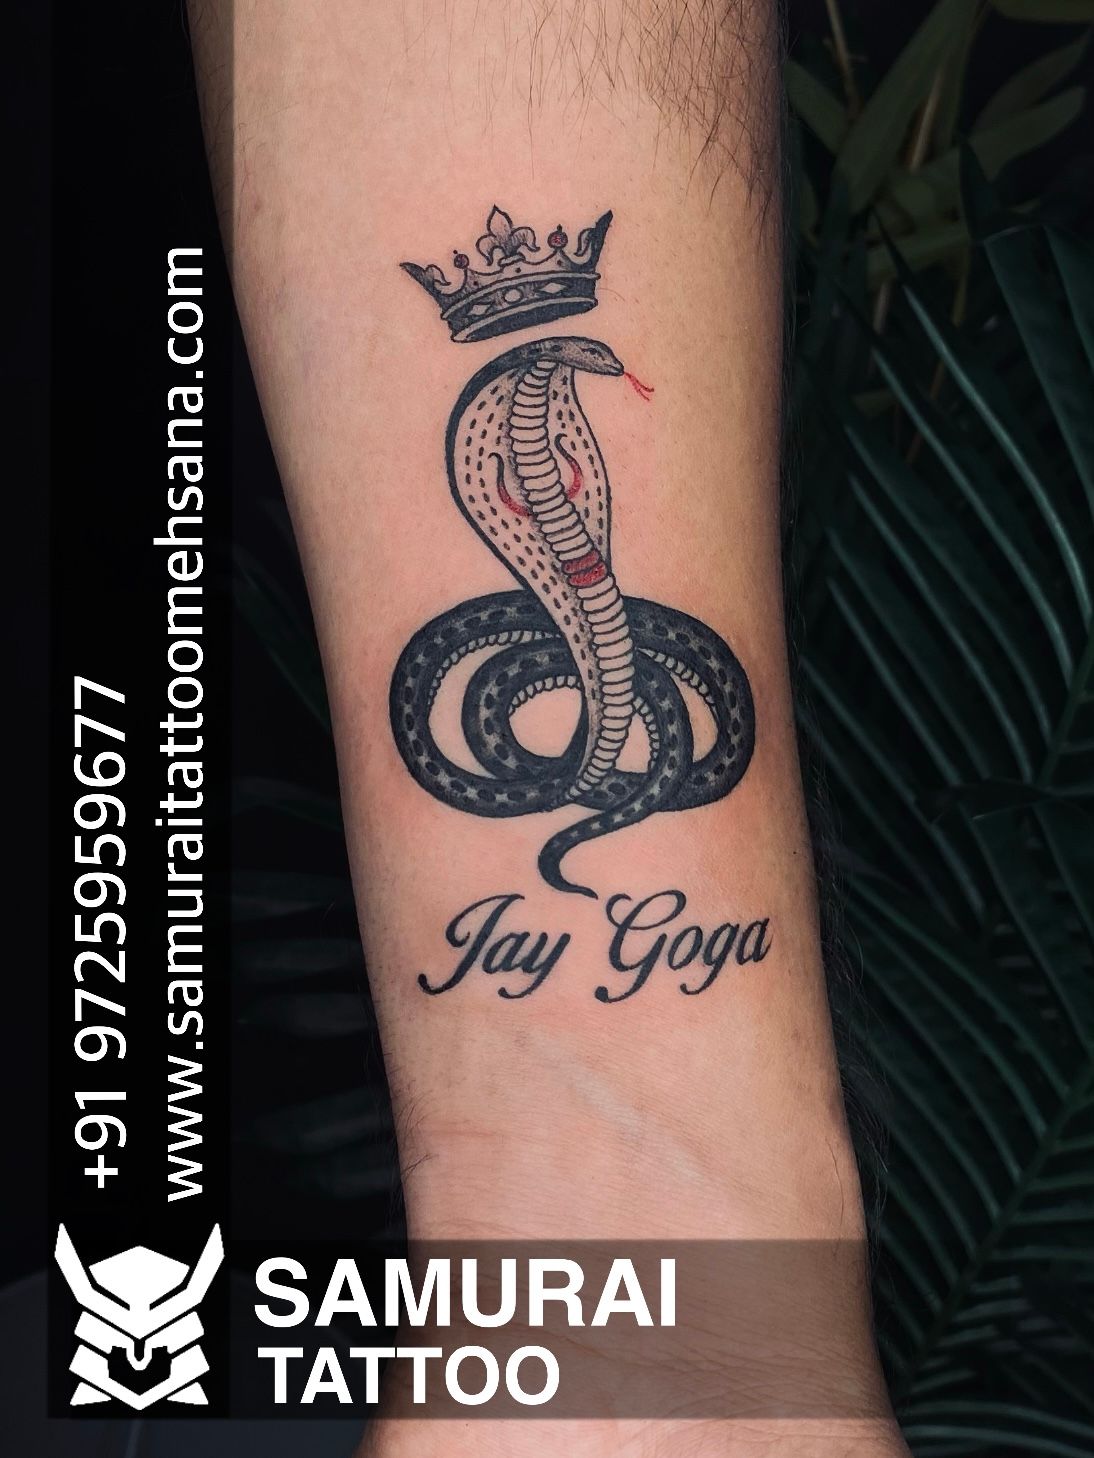 Tattoo uploaded by Vipul Chaudhary  Goga maharaj tattoo  Goga tattoo  Jay  goga tattoo  Jay goga maharaj tattoo  Tattoodo